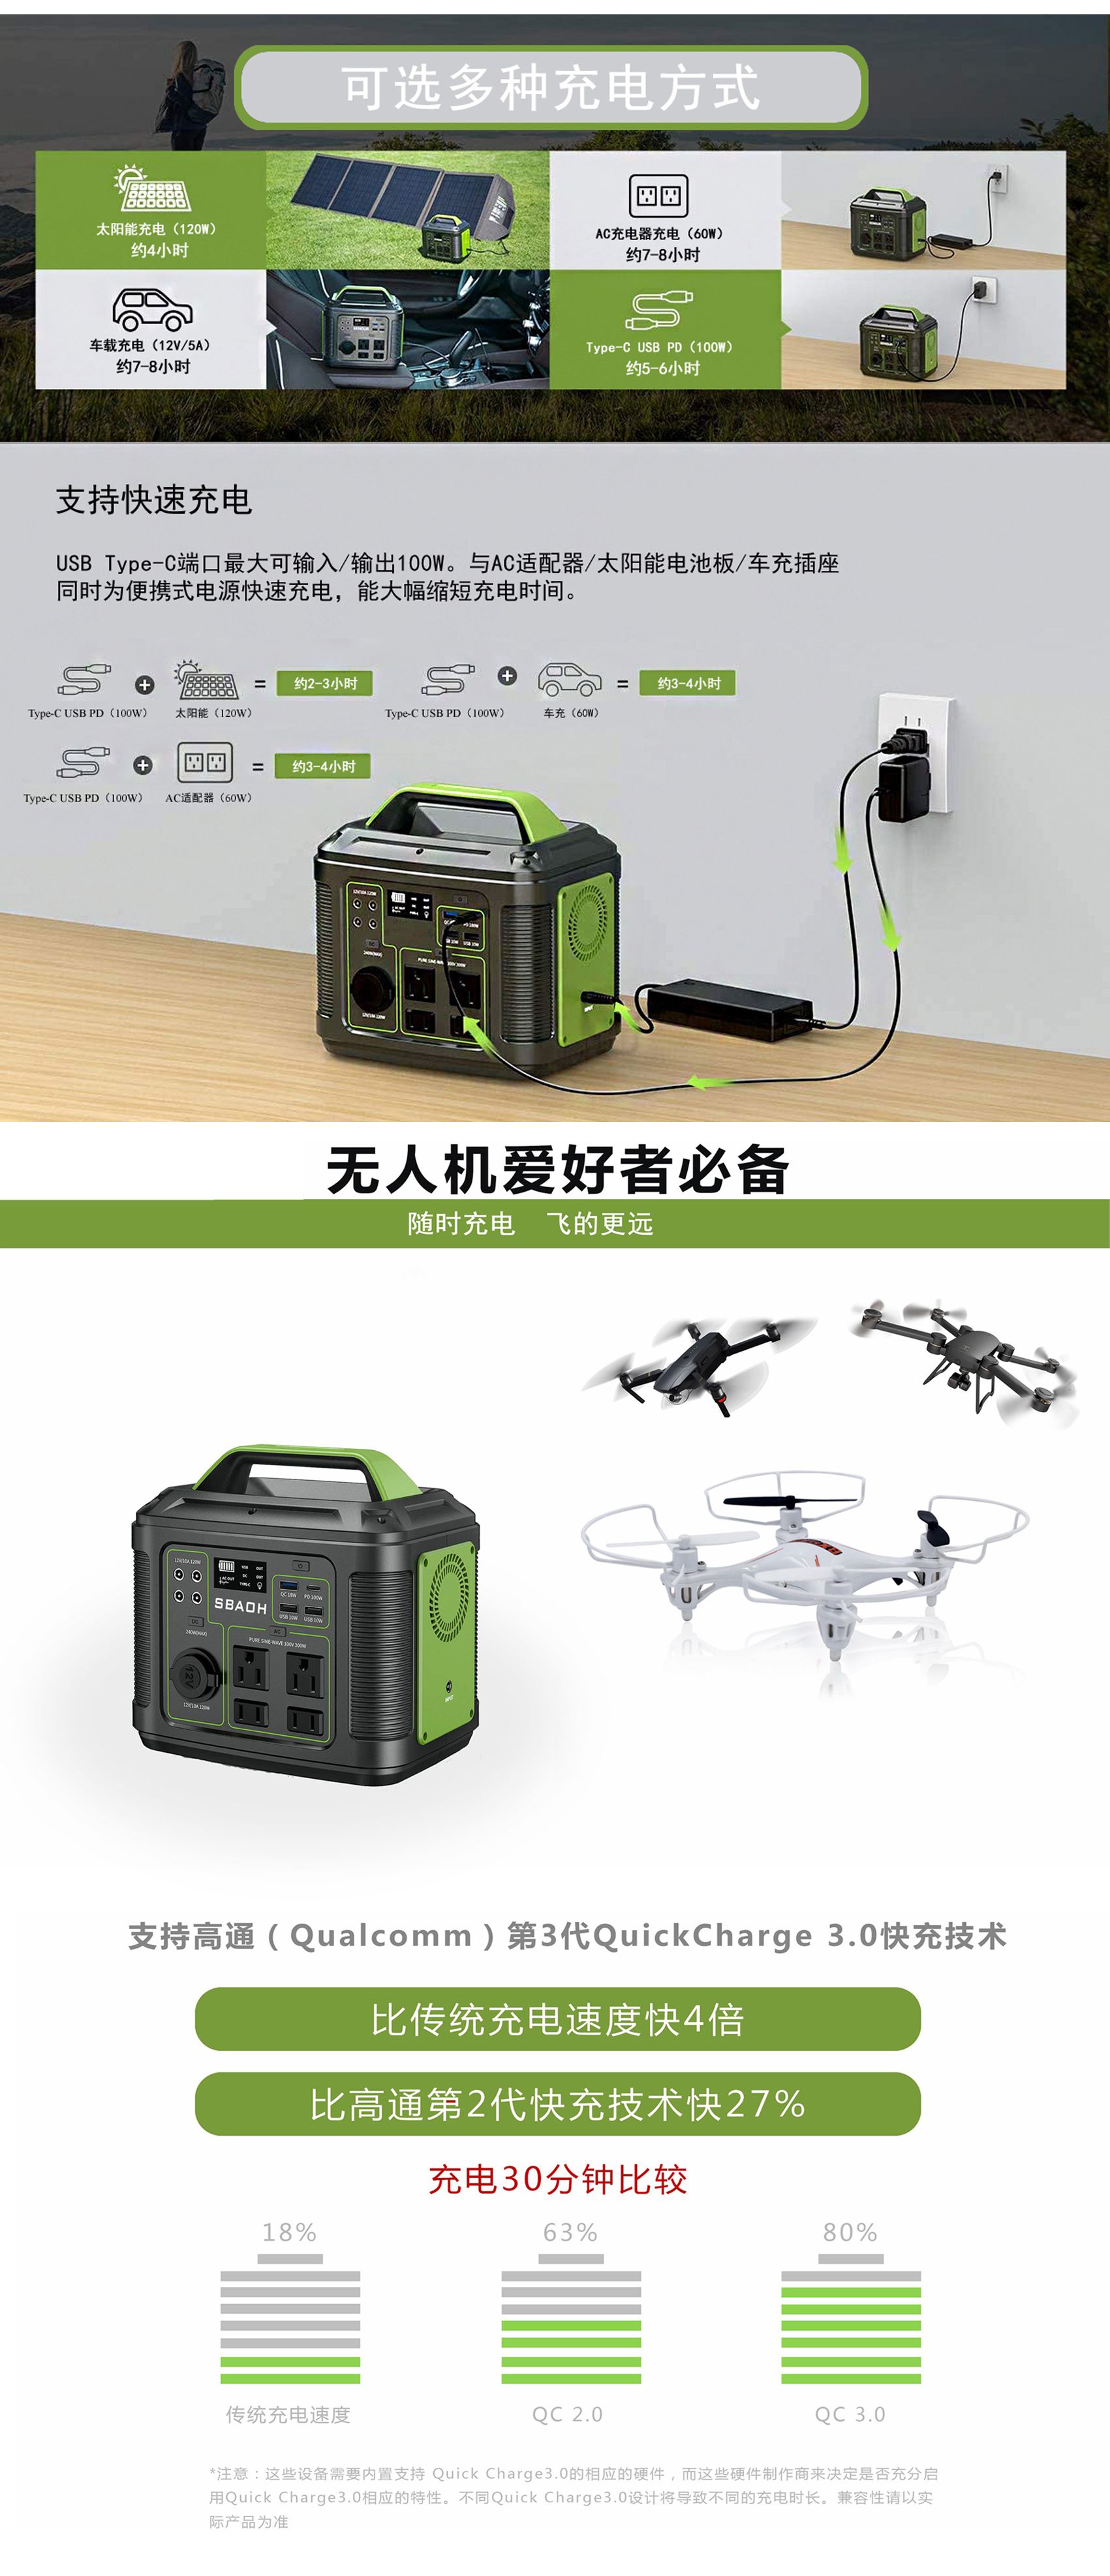 P302 Portable Power Supply - Shenzhen SBAOH Technology Co., Ltd